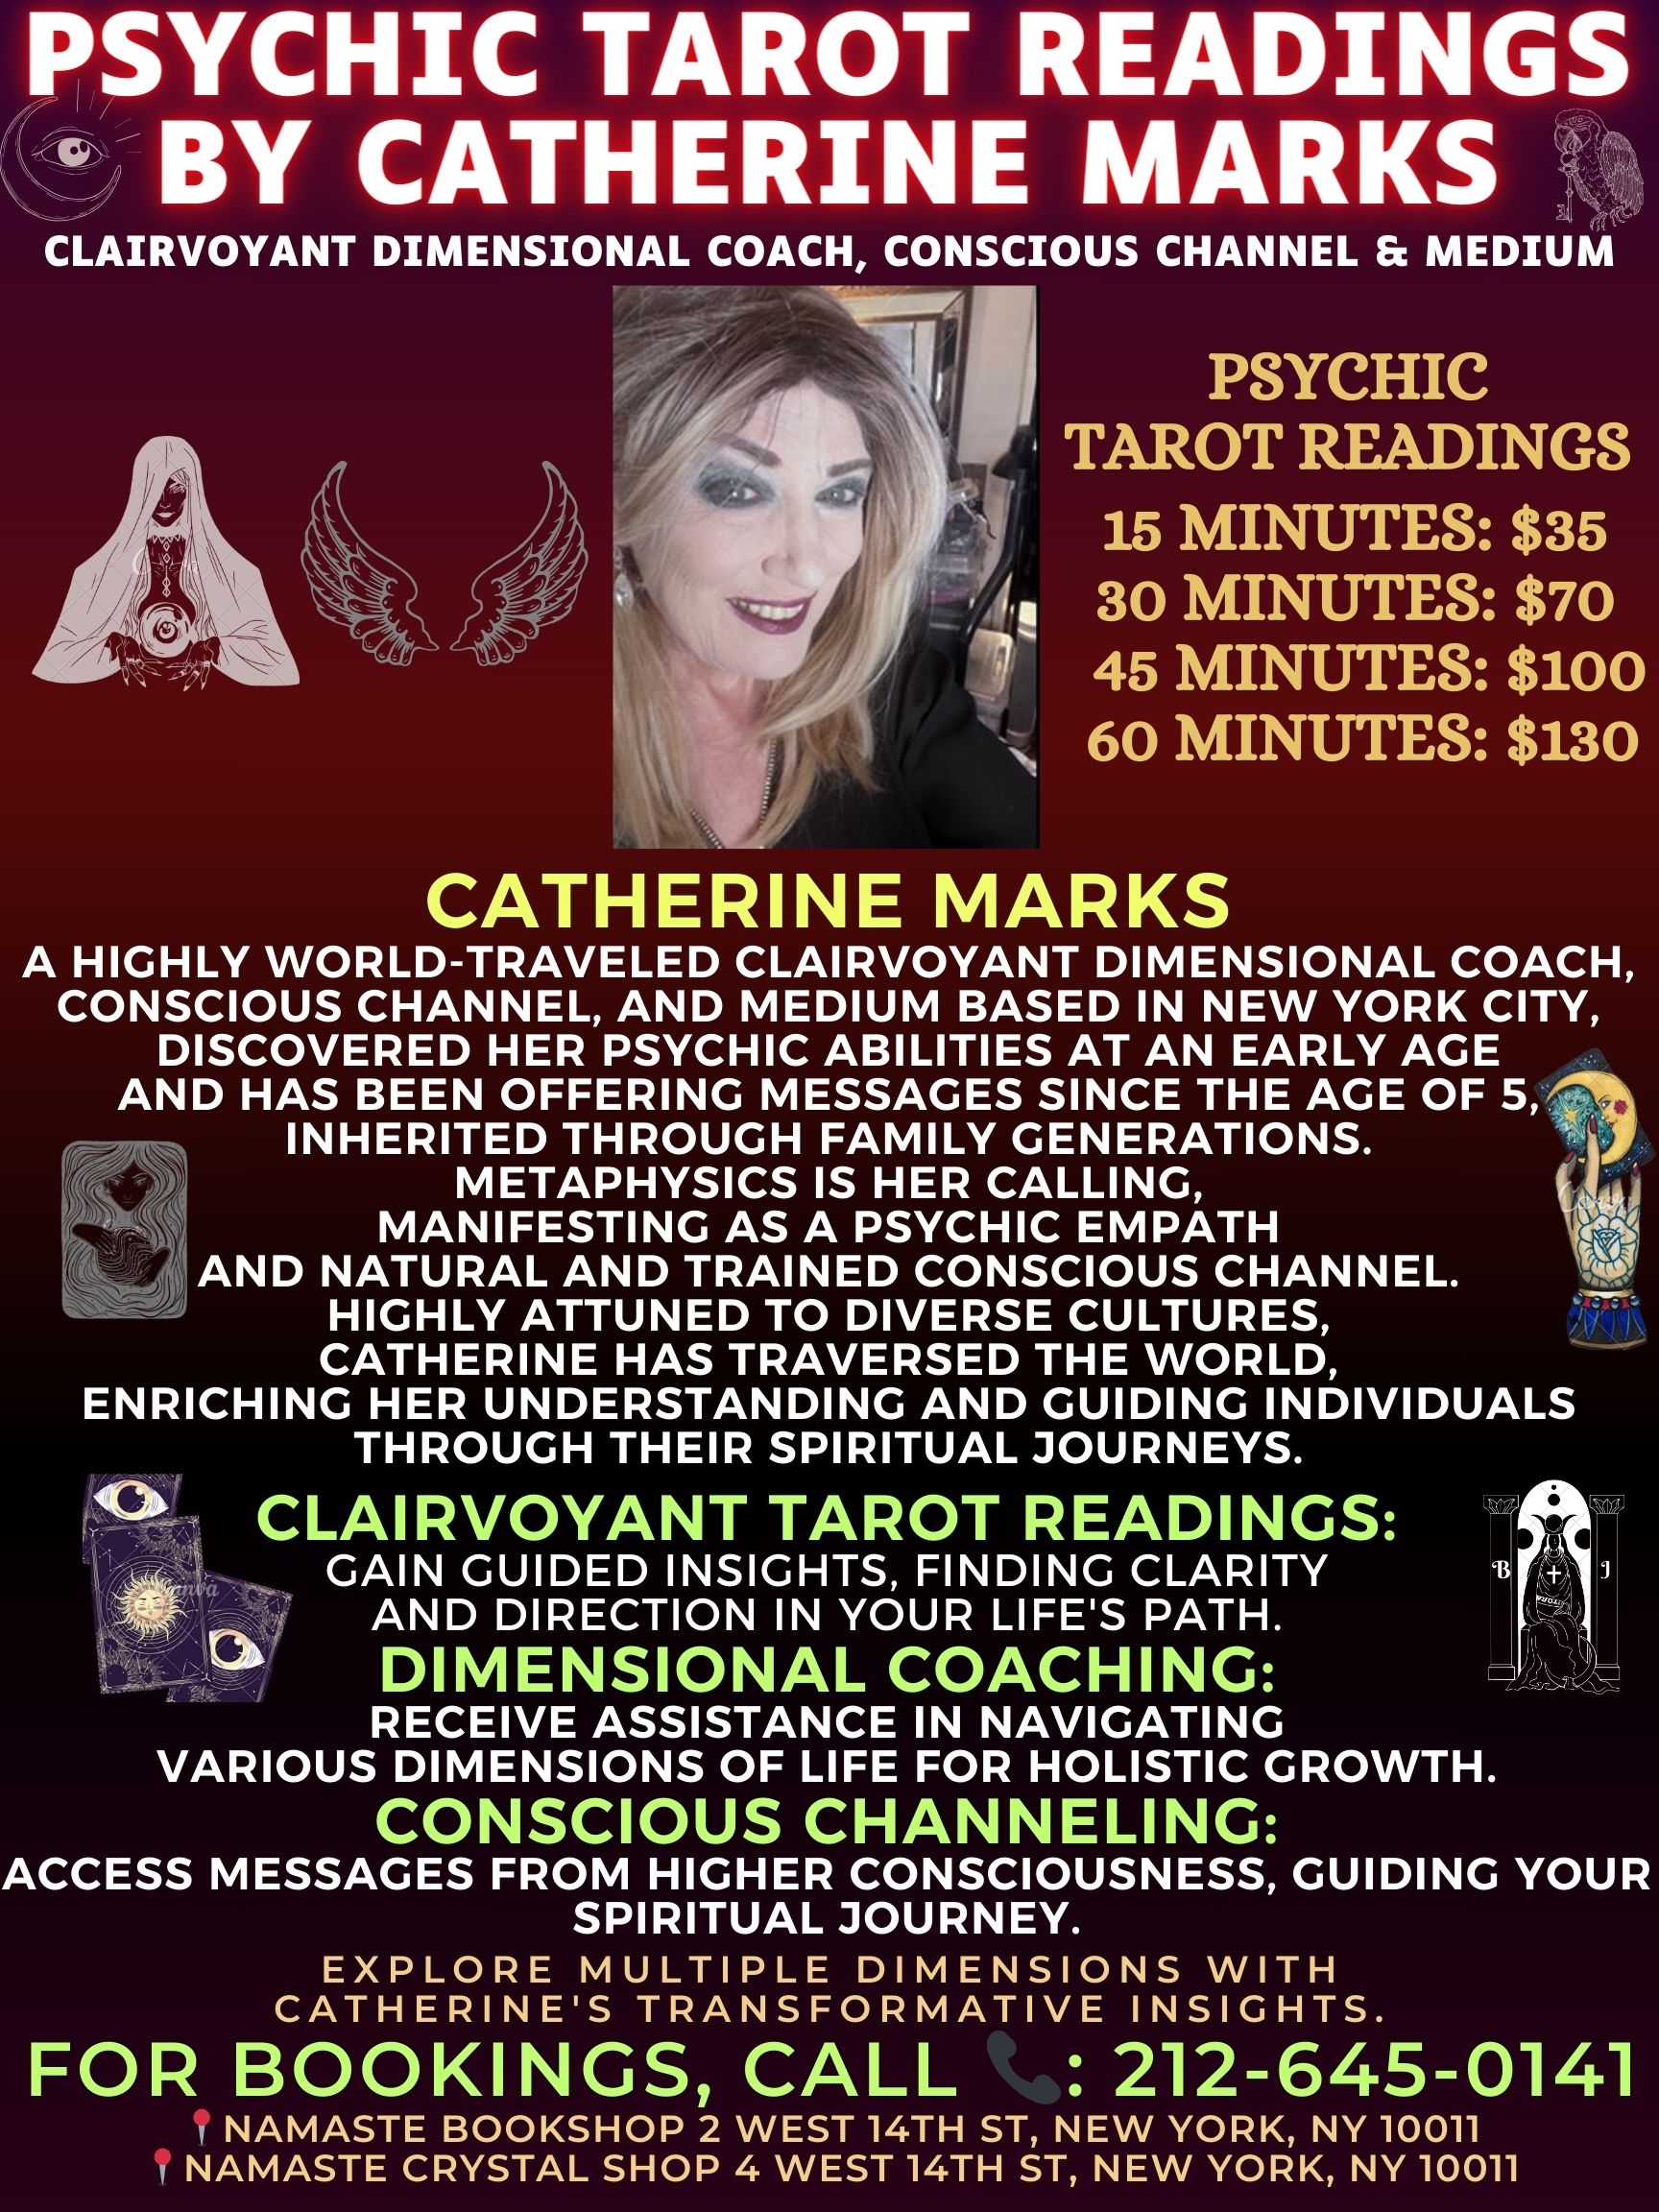 catherine-marks-psychic-tarot-reader.jpg